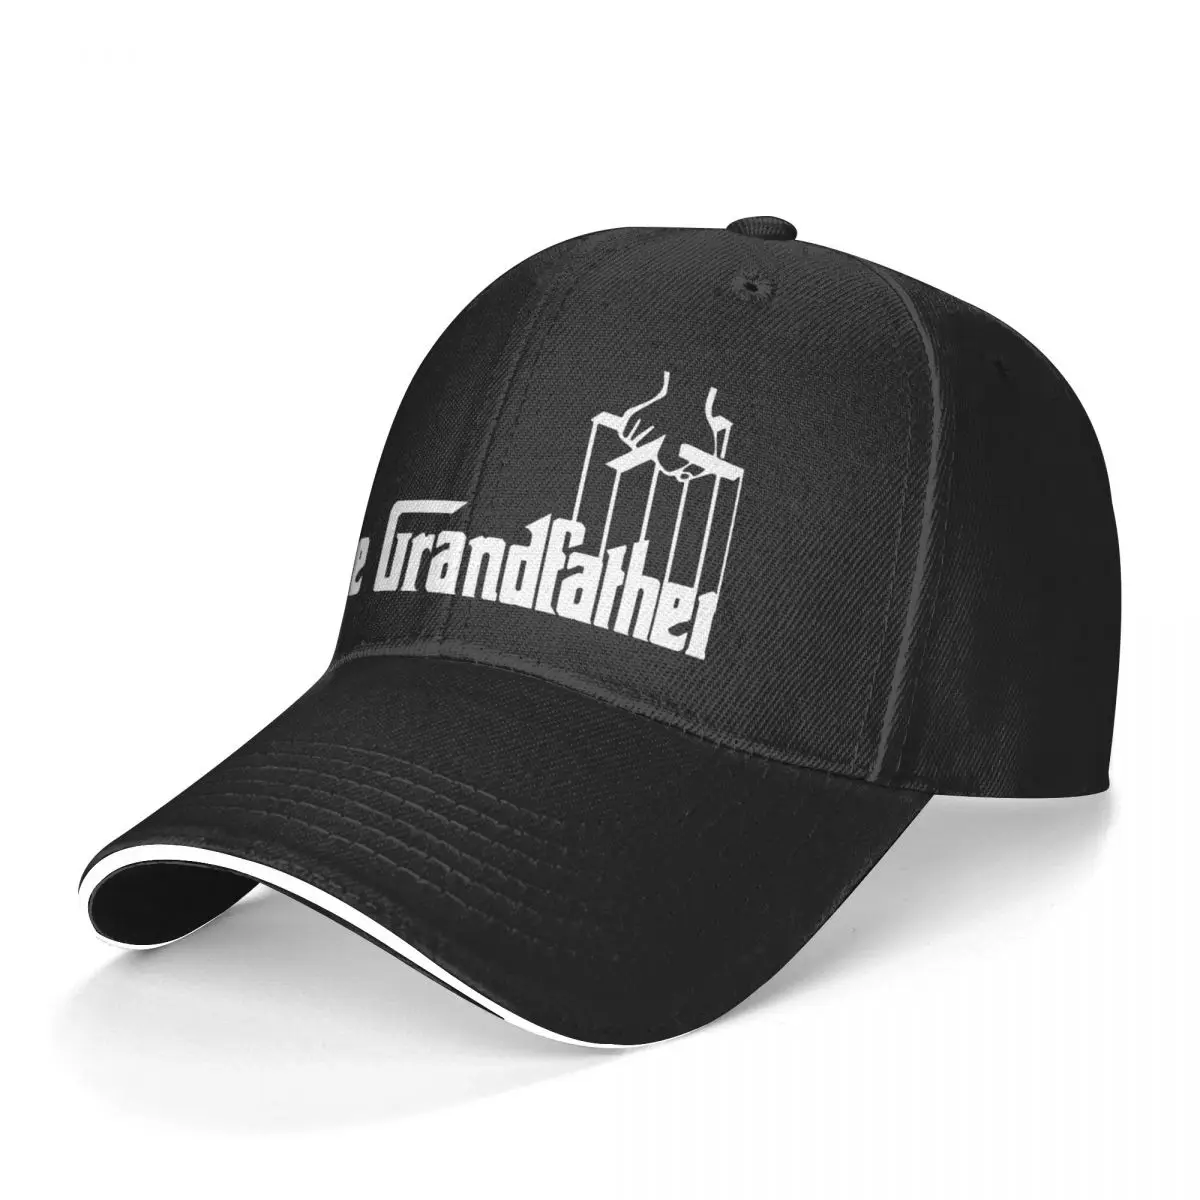 Godfather Baseball Cap The Grandfather Kpop Casual Hip Hop Hats Cool Printed Unisex Snapback Cap